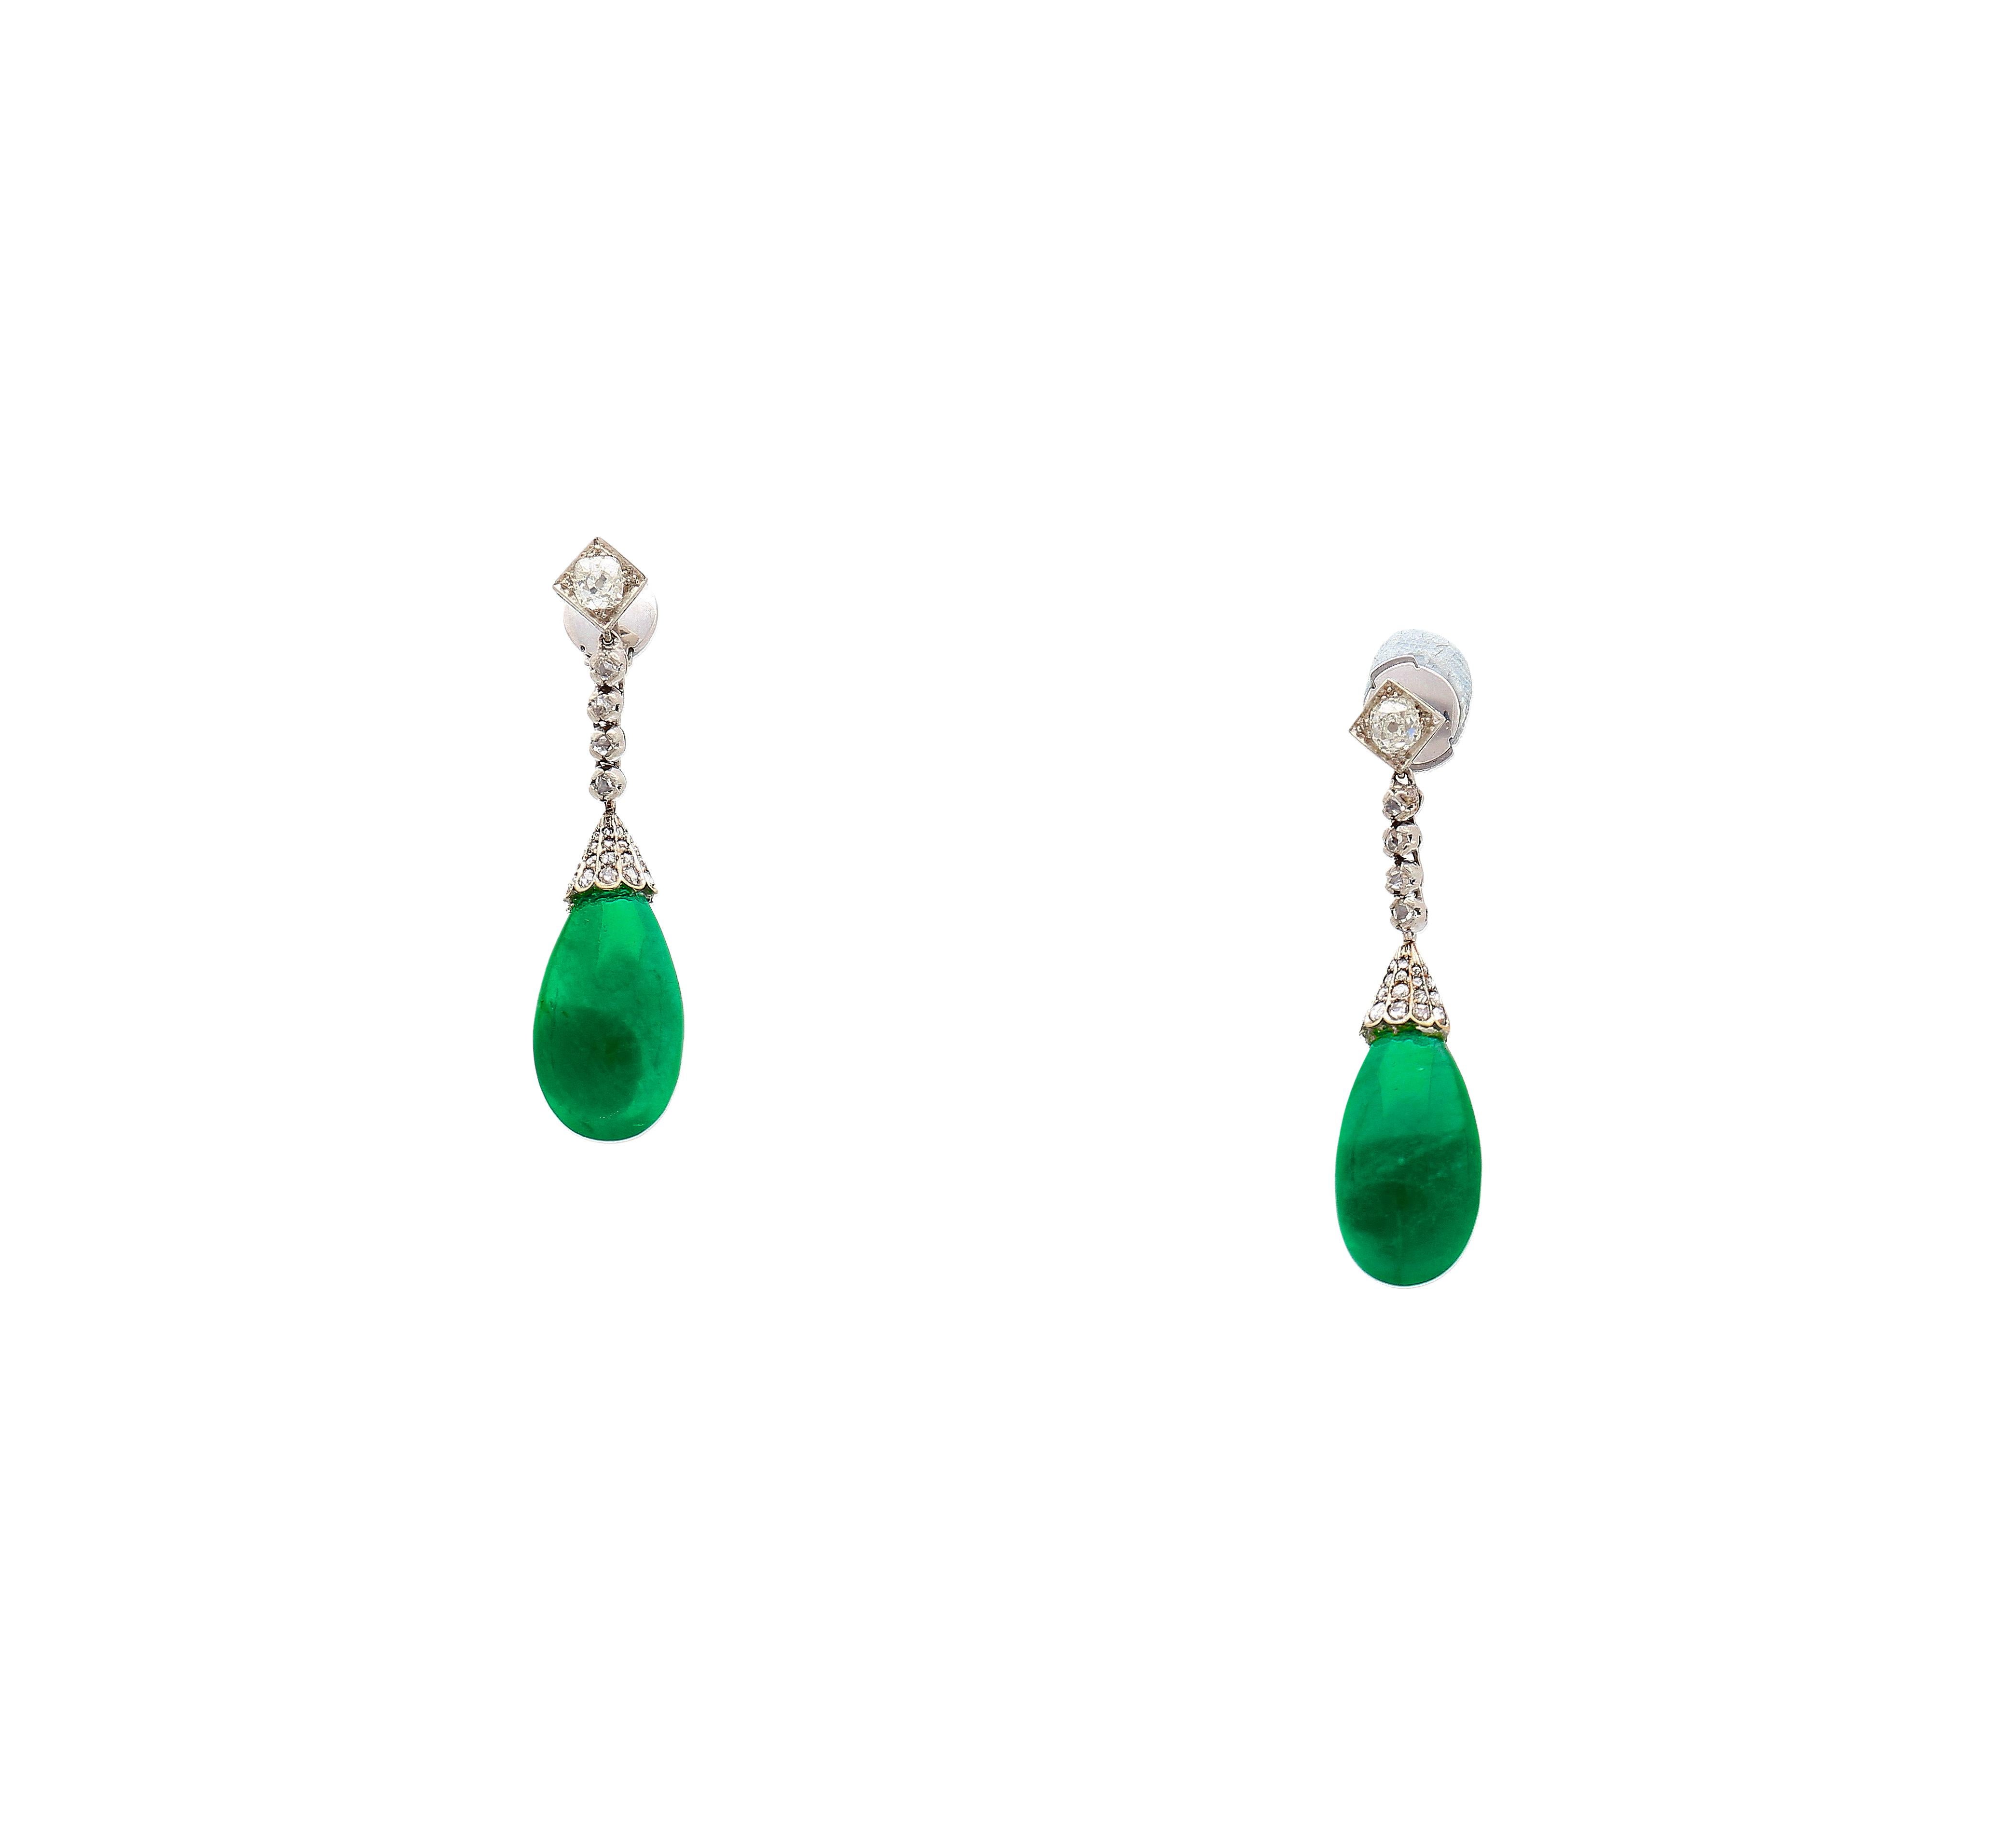 Art Deco Era 21 Carat Cabochon Pear Shape Emerald Drop Earrings  AGL Certified For Sale 2